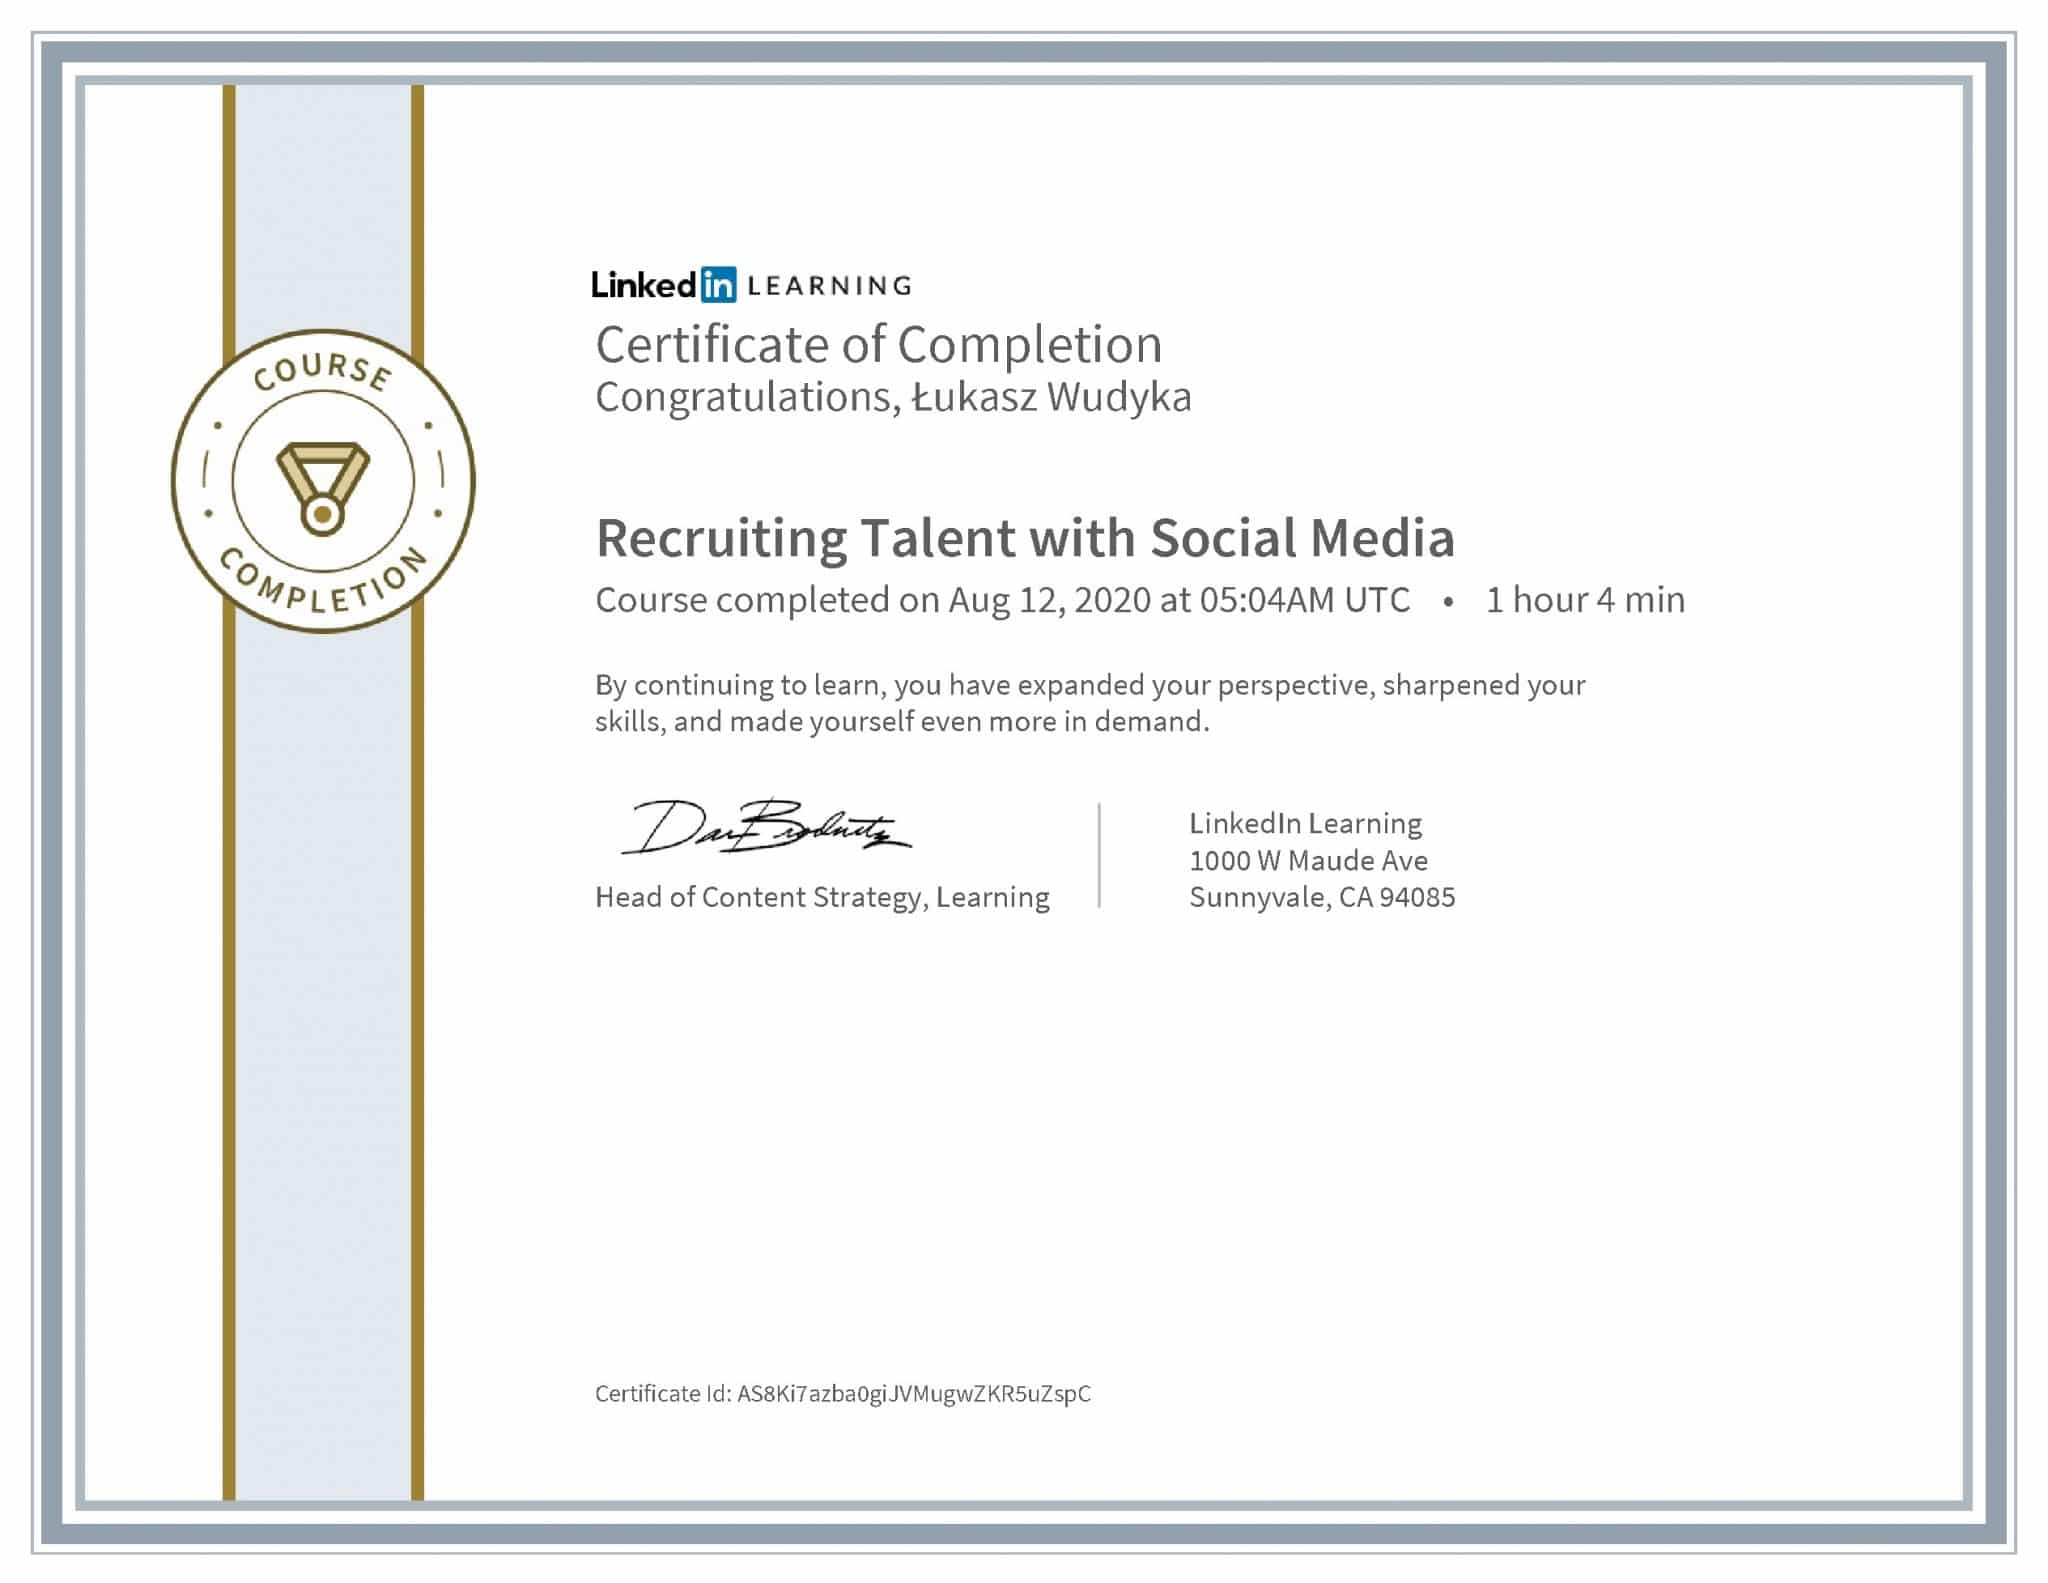 Łukasz Wudyka certyfikat LinkedIn Recruiting Talent with Social Media